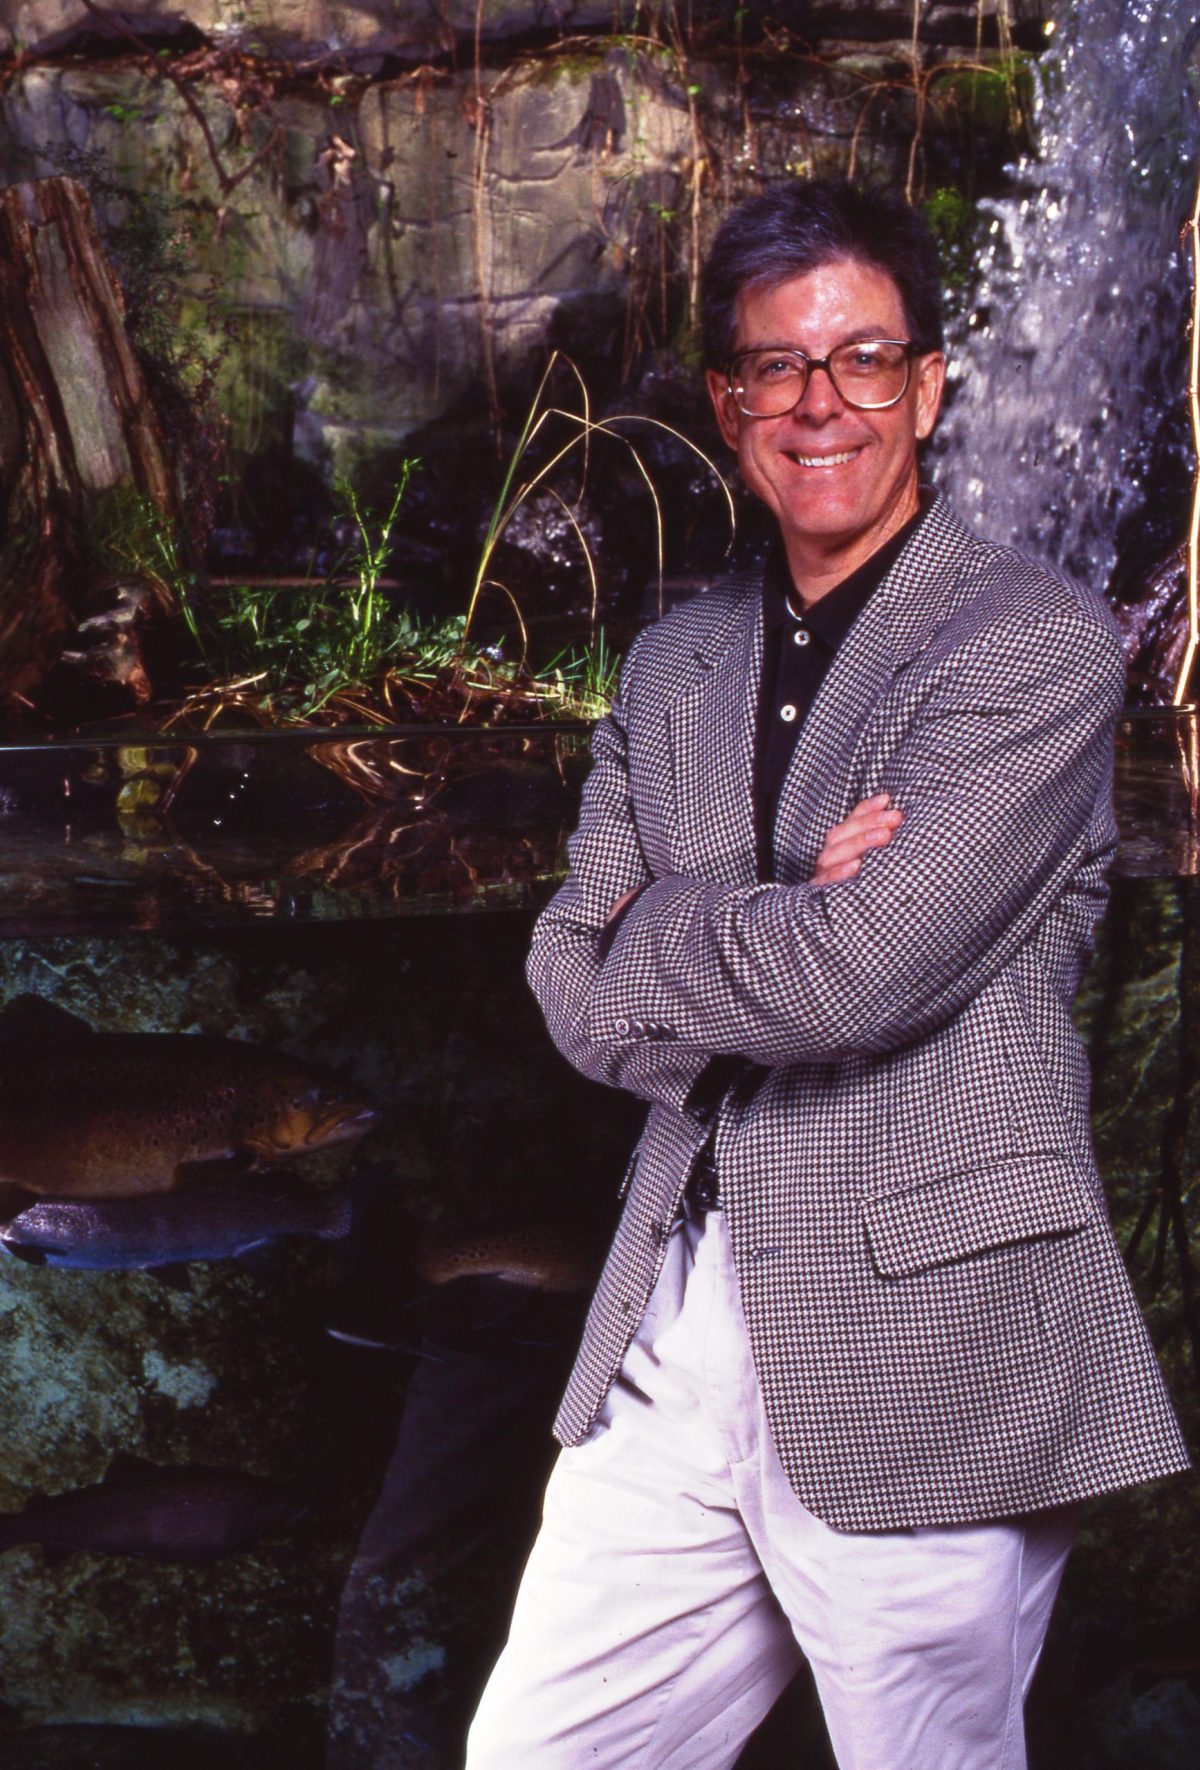 Jackson Andrews poses next to the Alligator Bayou exhibit in the Tennessee Aquarium